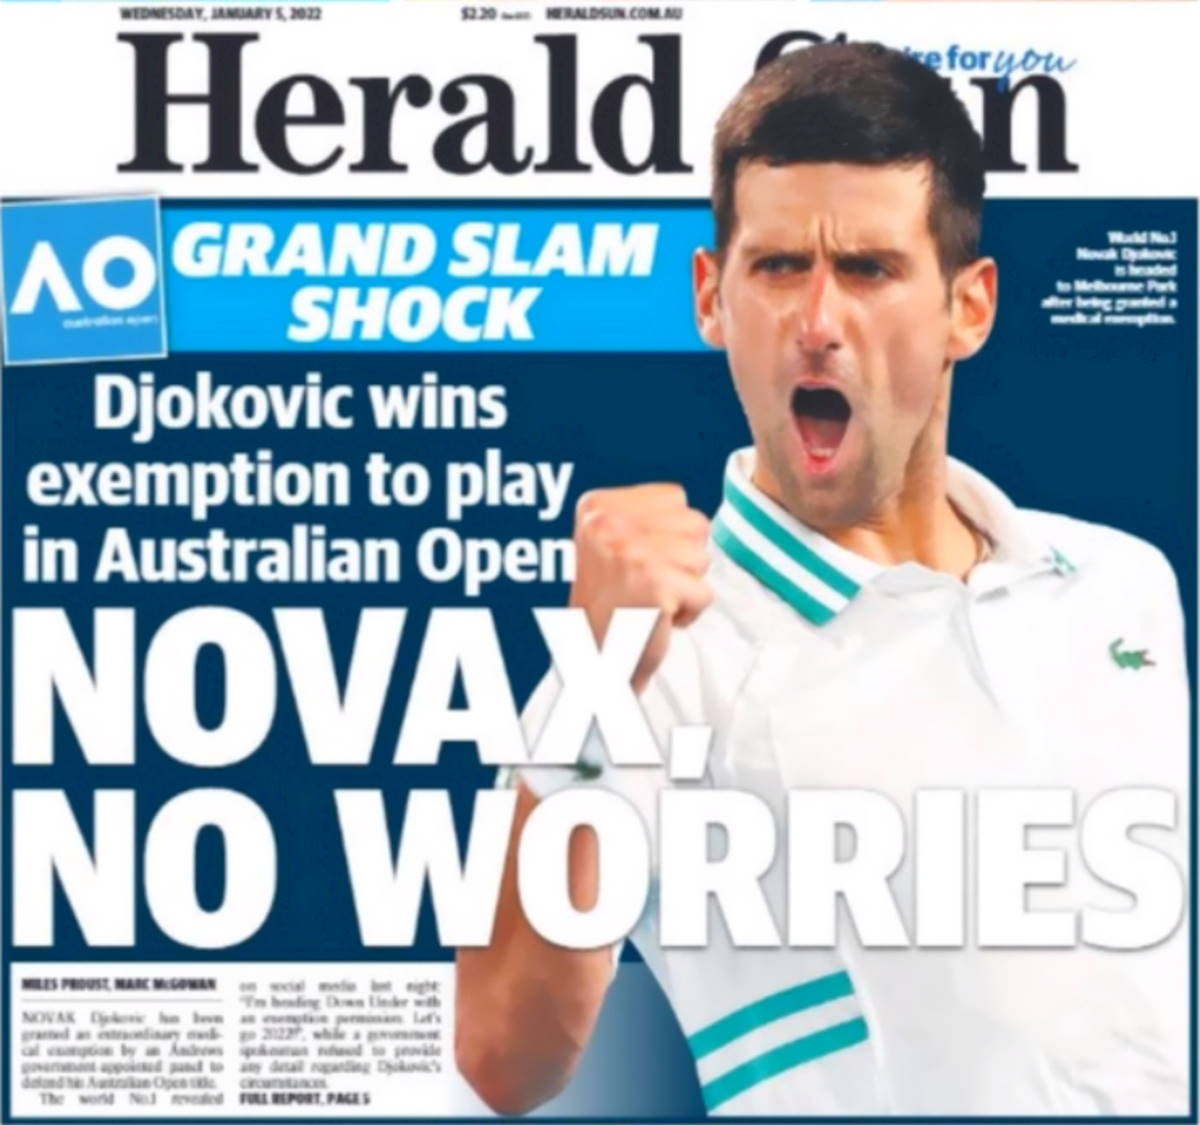 Un tribunale dovrà esprimersi se espellere o meno Novak Djokovic dall'Australia